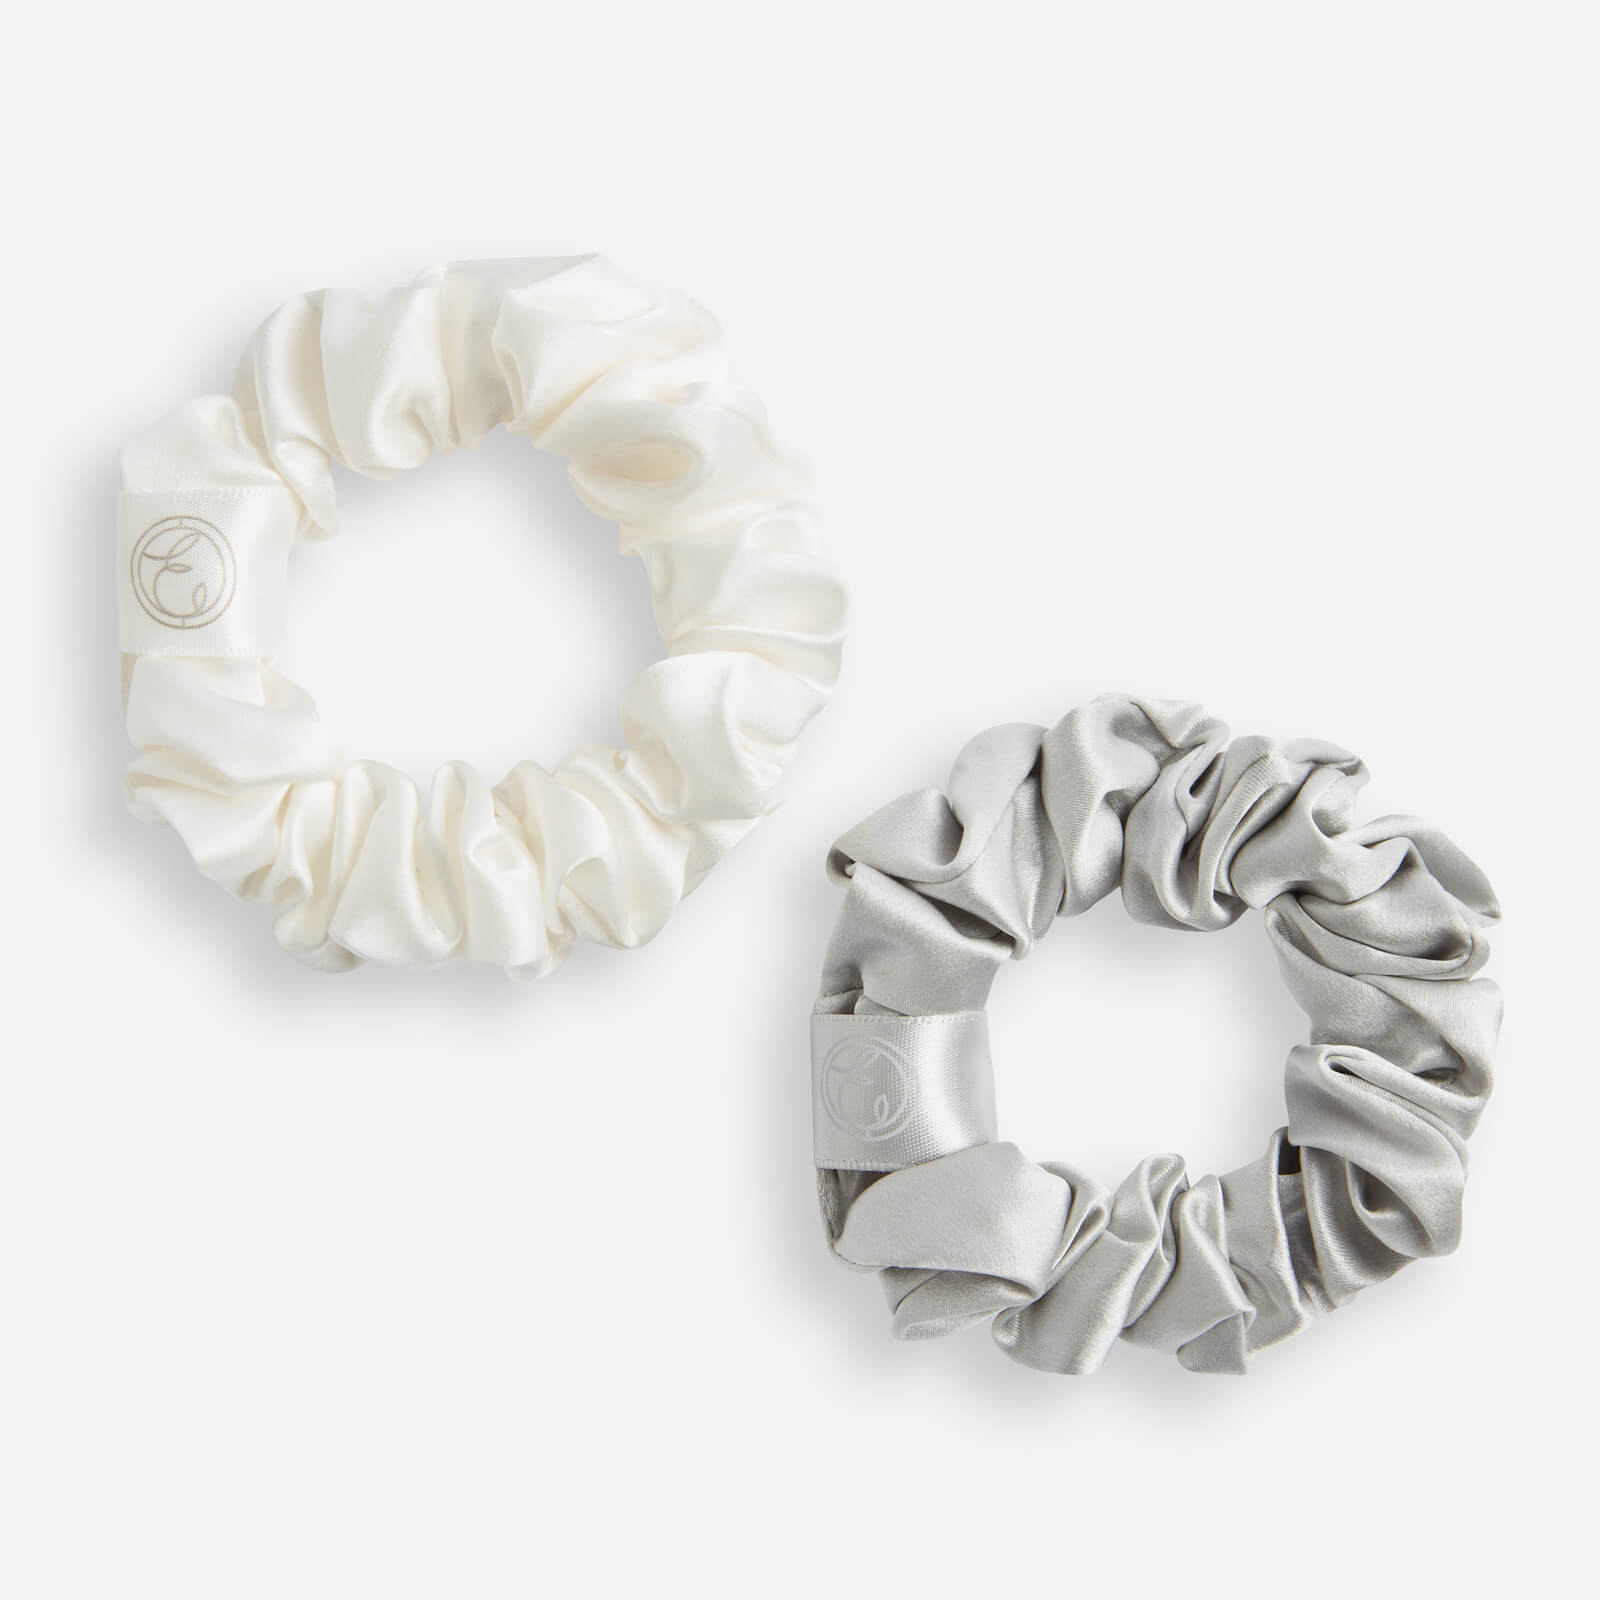 ESPA Home Silk Scrunchie – Pearl White & Moonlight Grey lookfantastic.com imagine